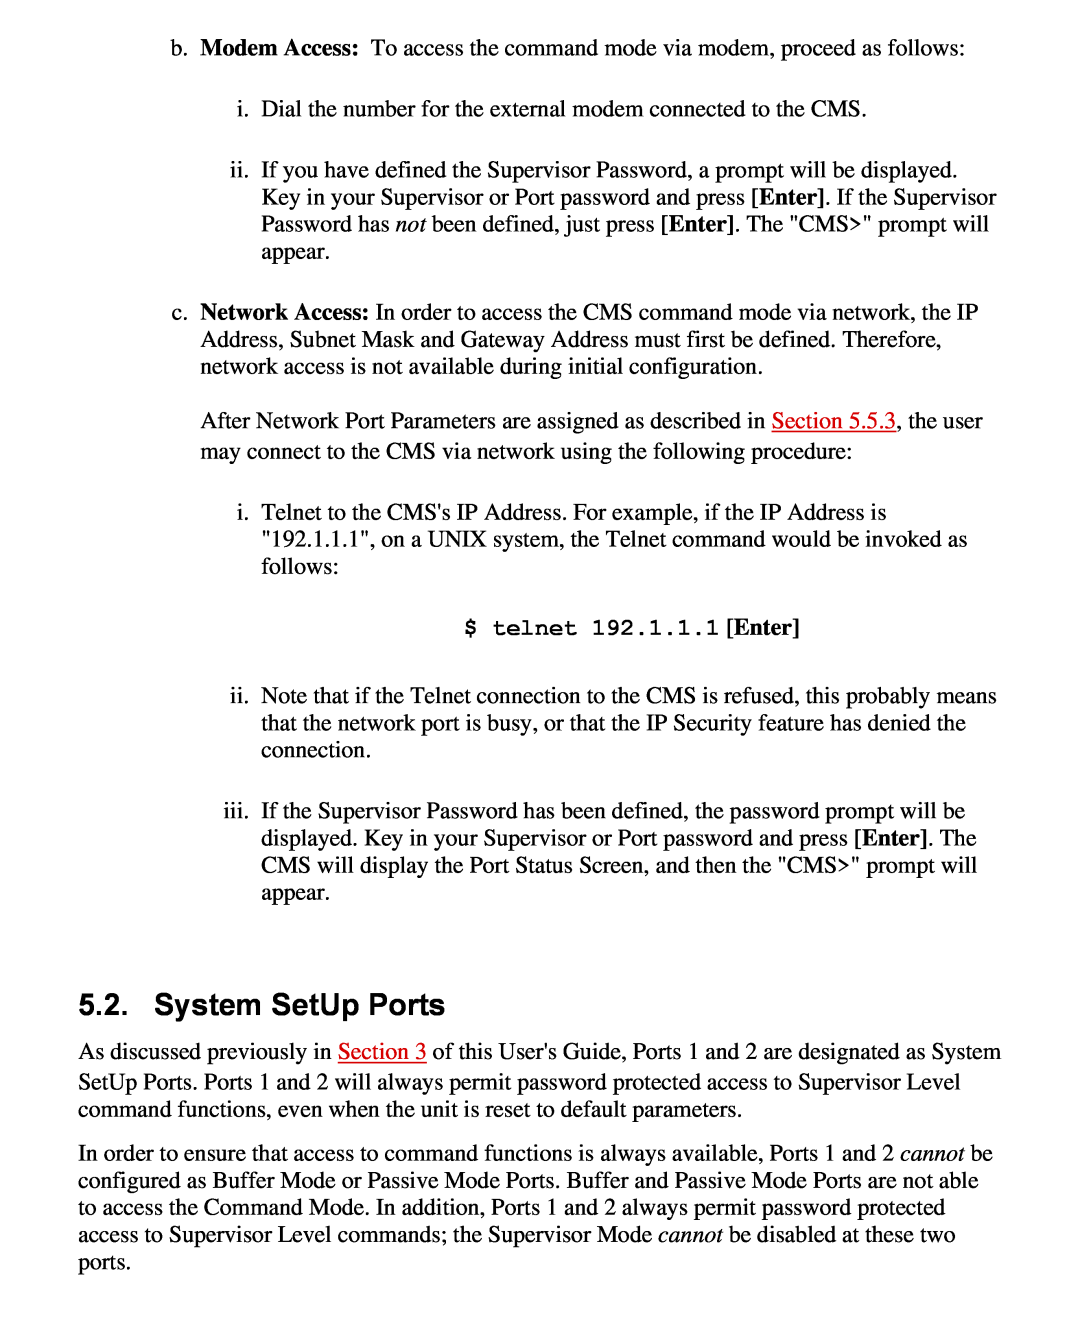 Western Telematic CMS-16 manual System SetUp Ports, $ telnet 192.1.1.1 Enter 